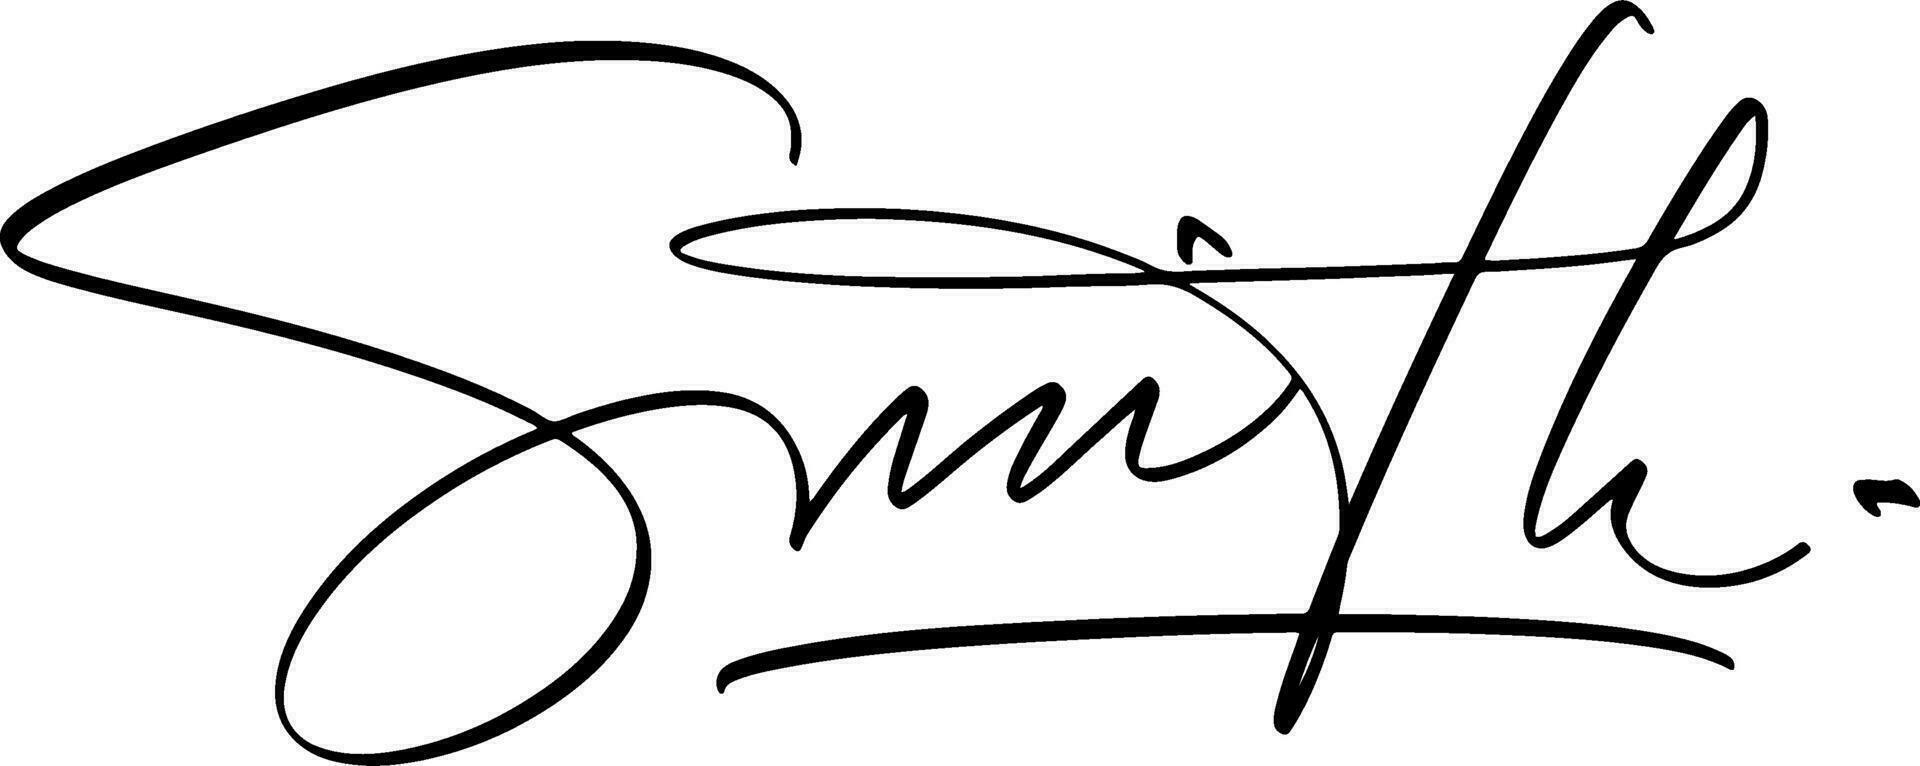 fake signature word vector